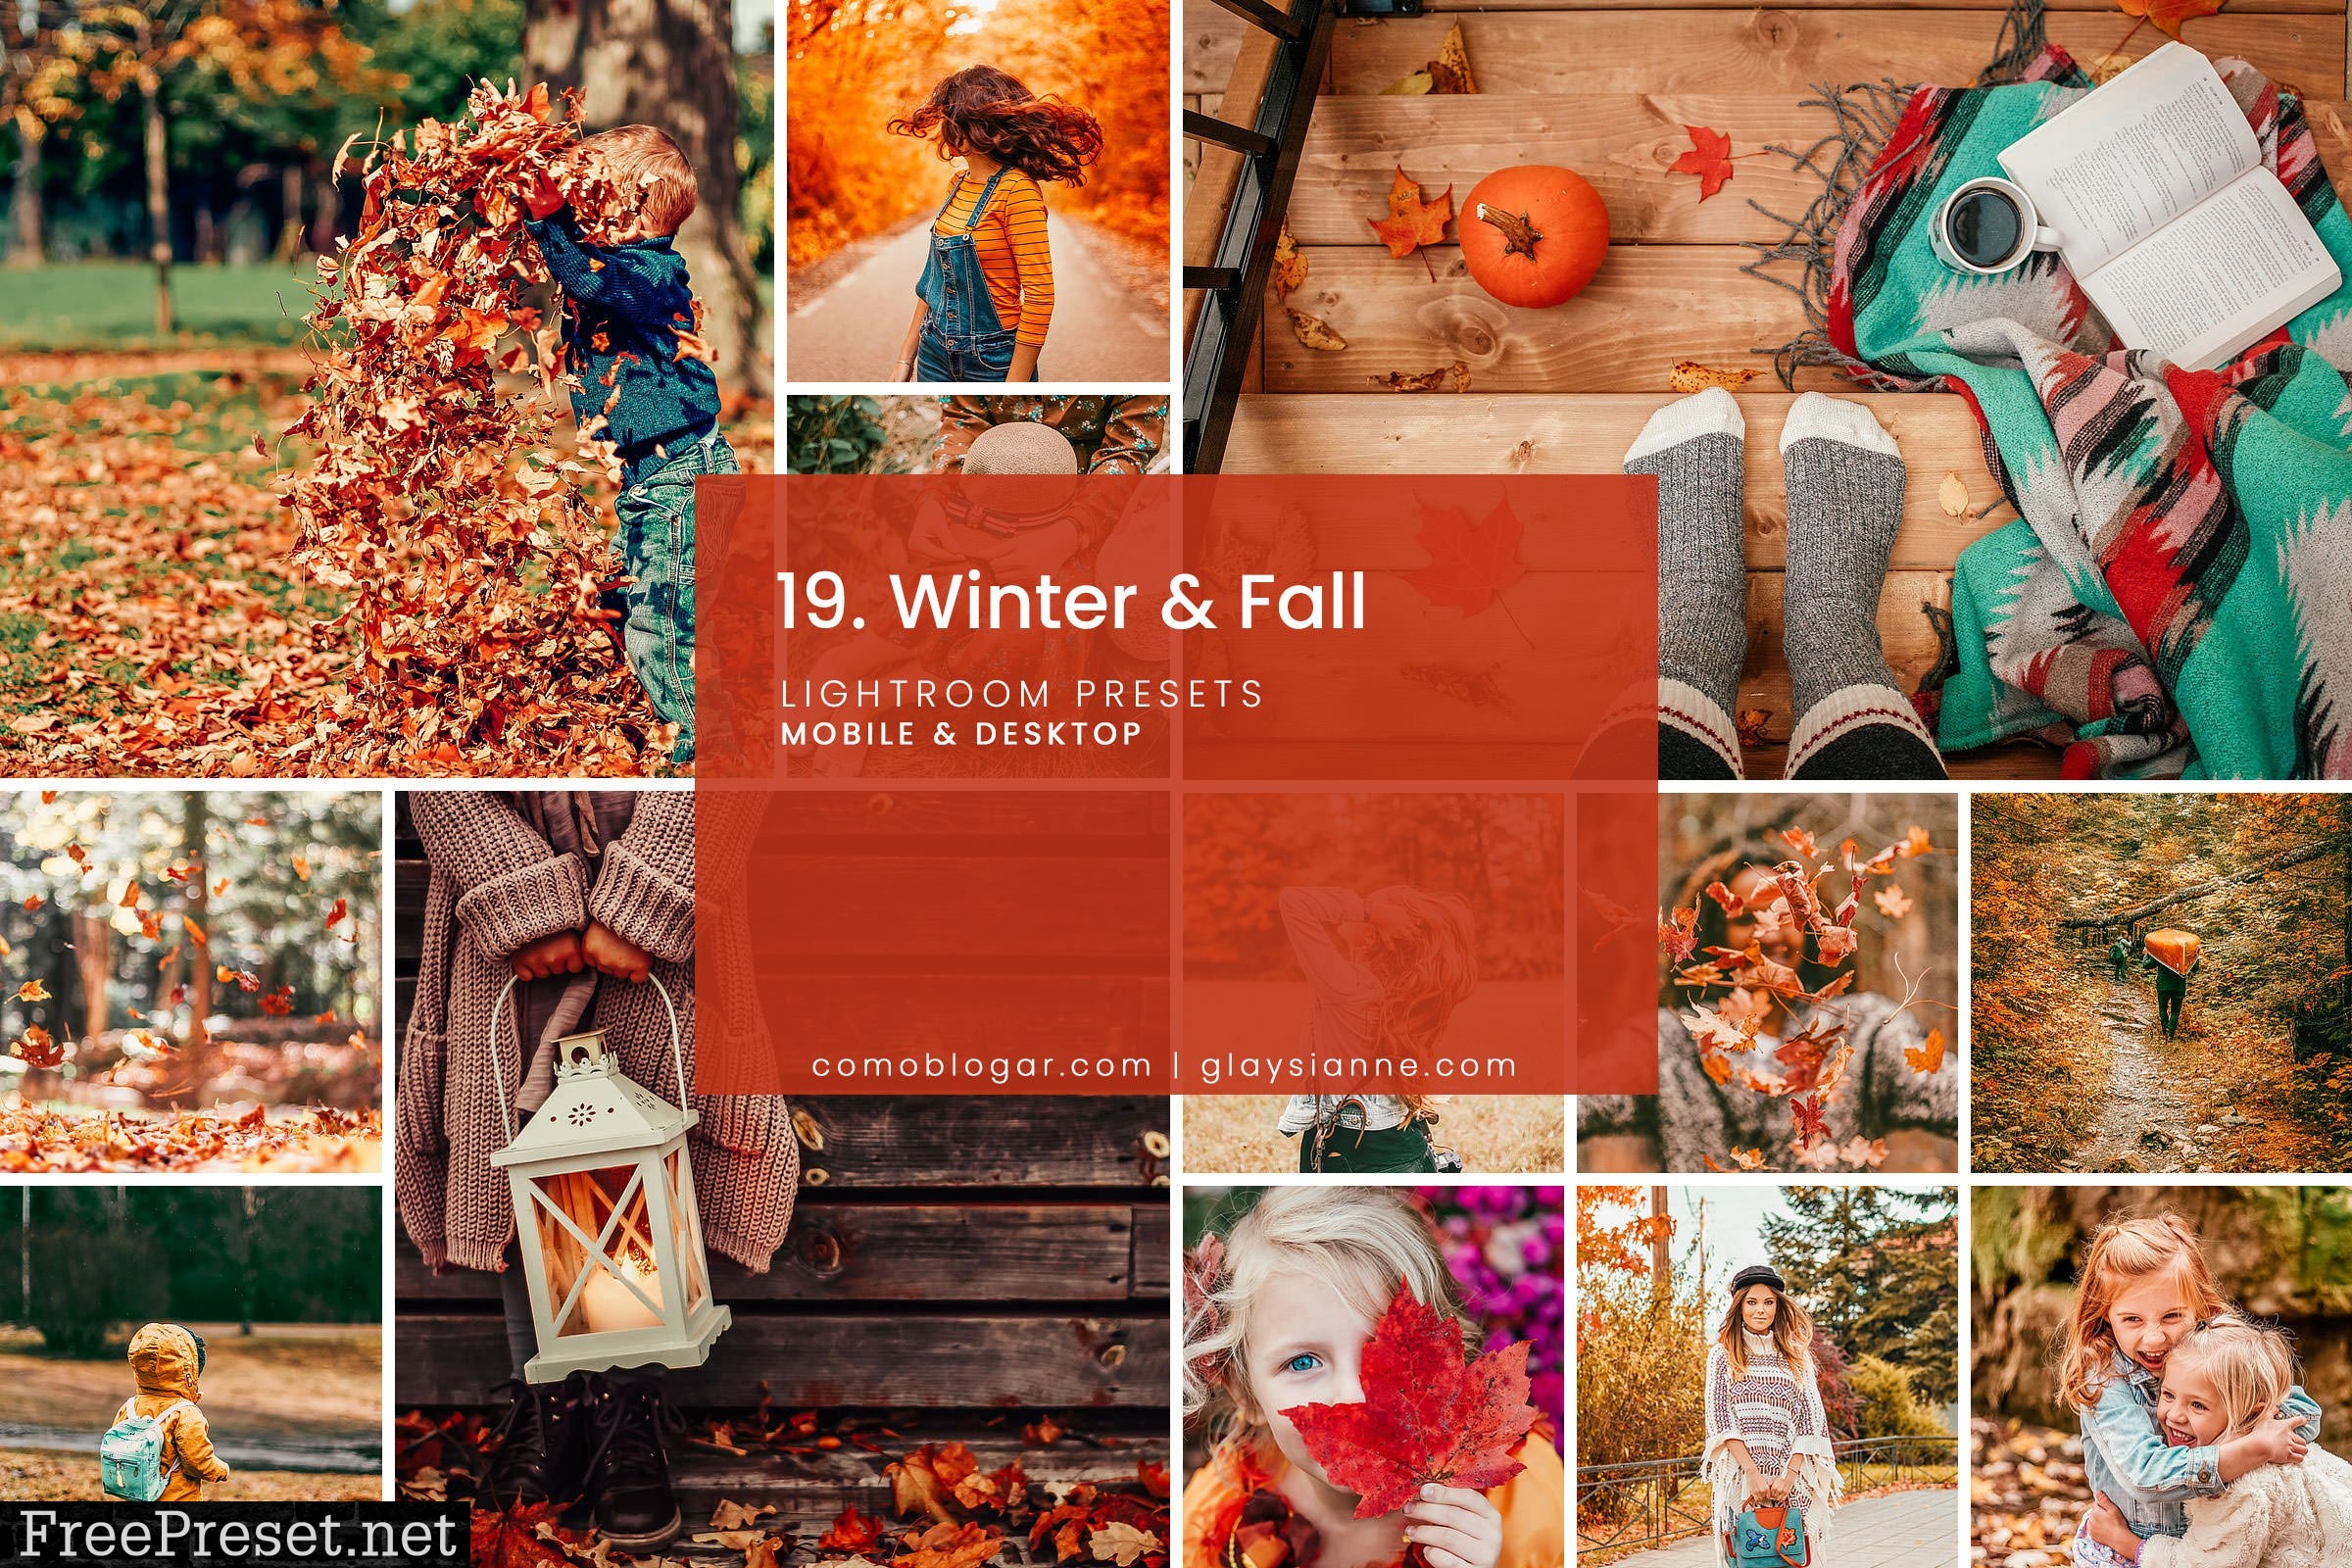 19. Winter & Fall